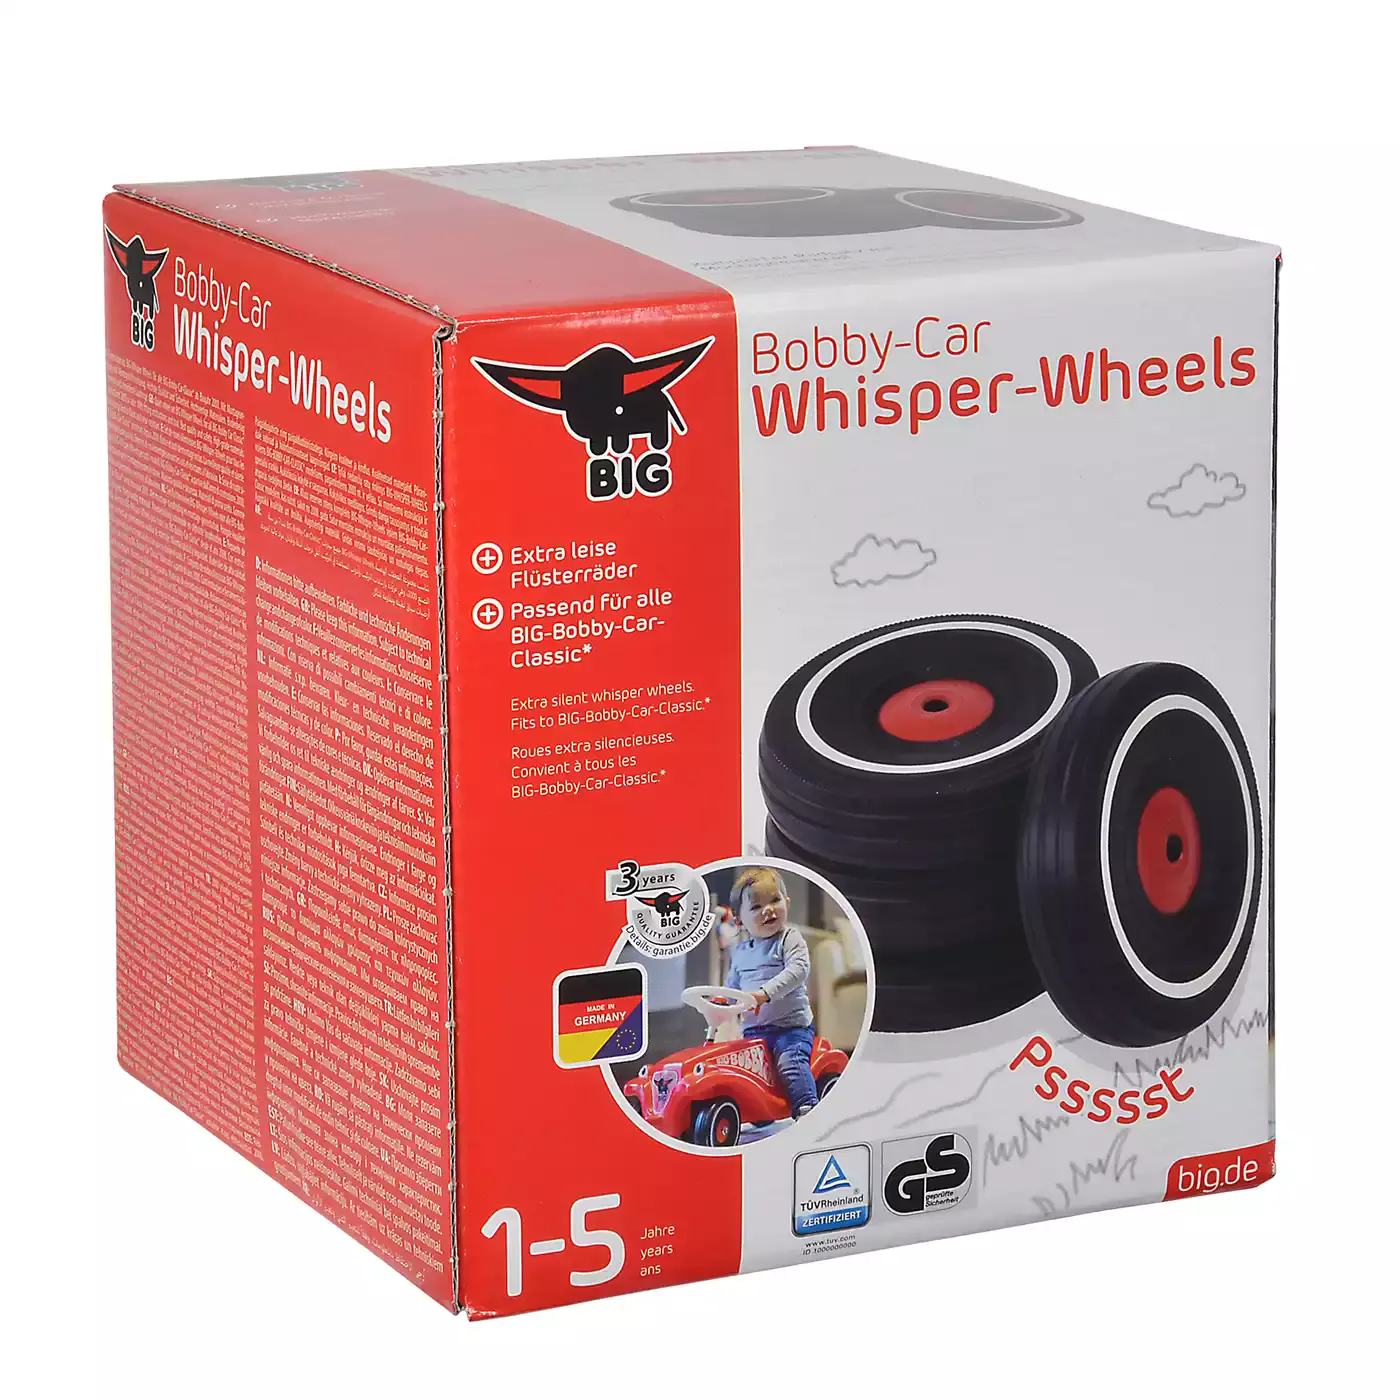 BIG-Bobby-Car-Whisper-Wheels BIG 2000540736009 7